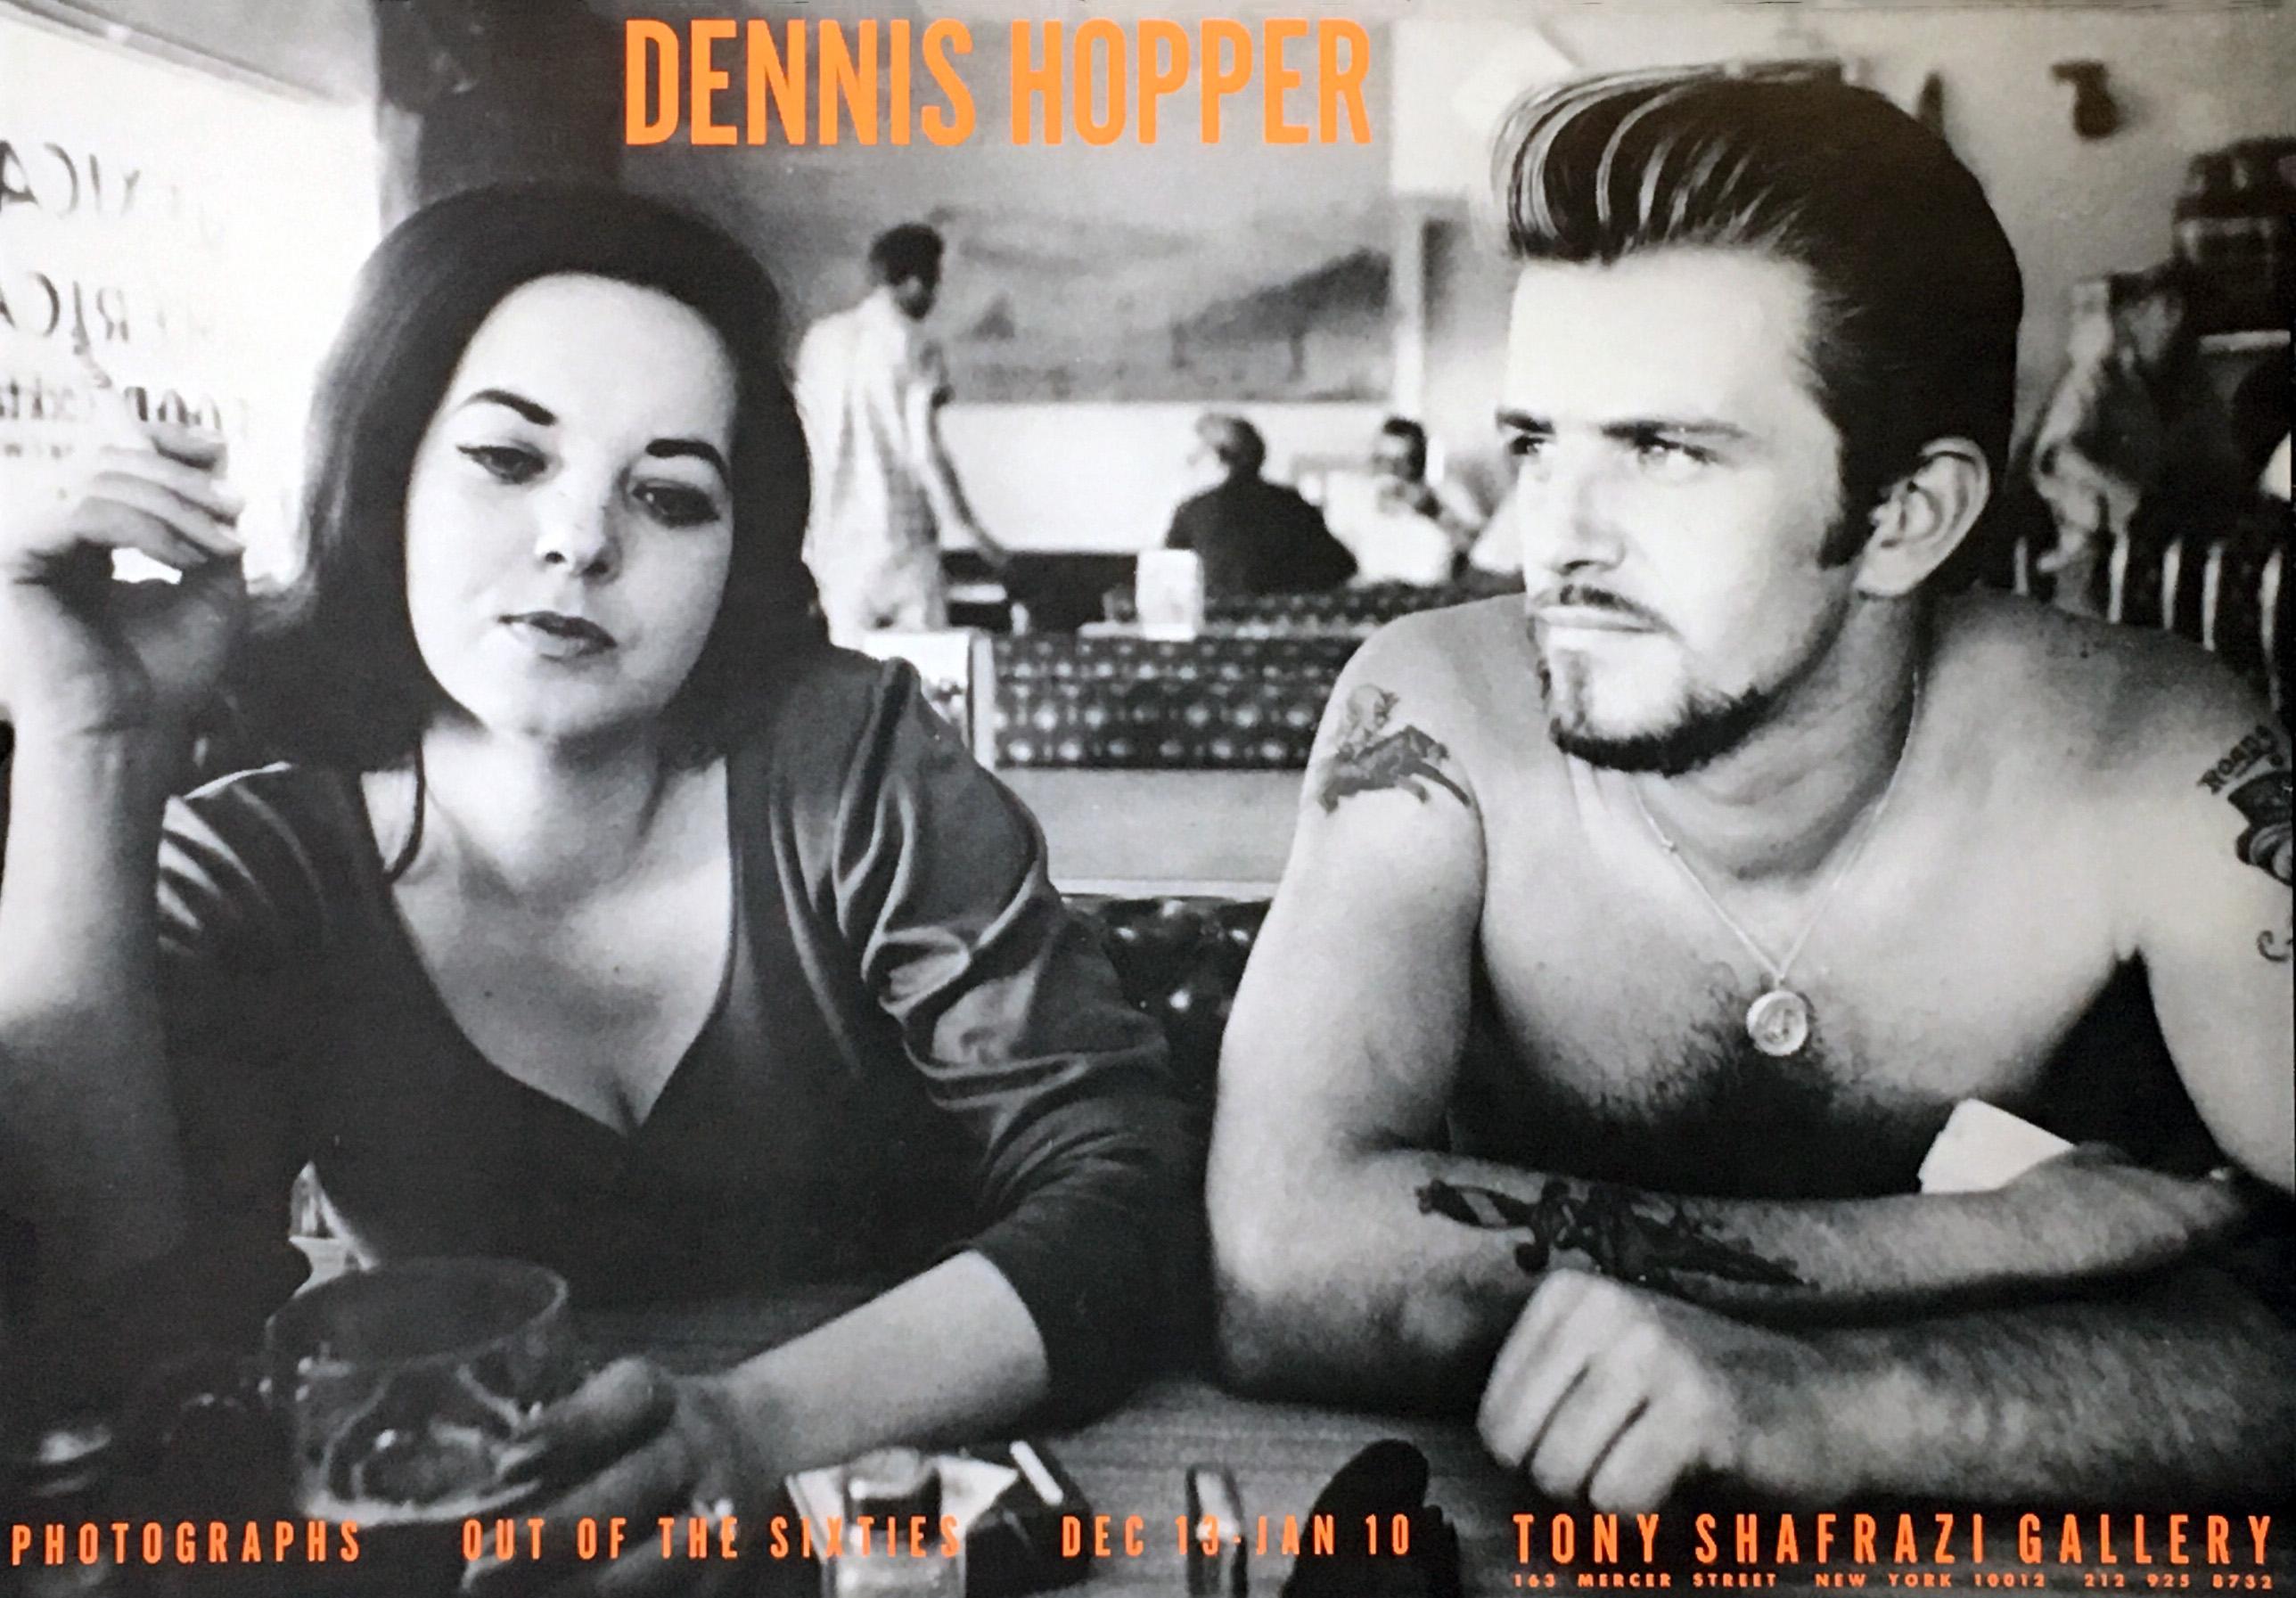 Dennis Hopper, Out of the Sixties Ausstellungsplakat:
1986 Ausstellungsplakat, herausgegeben von der Tony Shafrazi Gallery, New York 1986
Bildmerkmale: Dennis Hoppers 'Biker Couple' (1961) 

Medium: Offset-Lithographie.
Abmessungen: 17 x 24